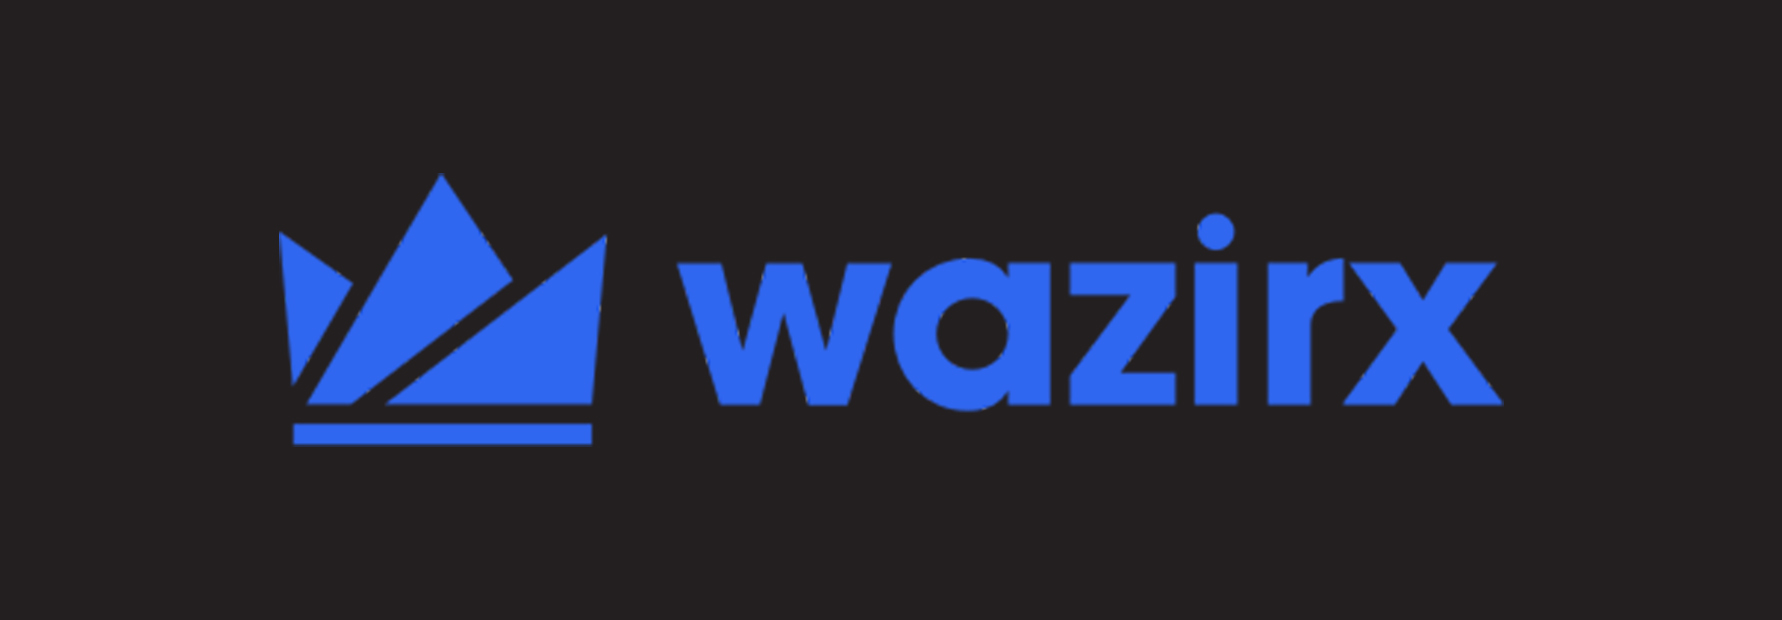 wazirX-logo.jpg